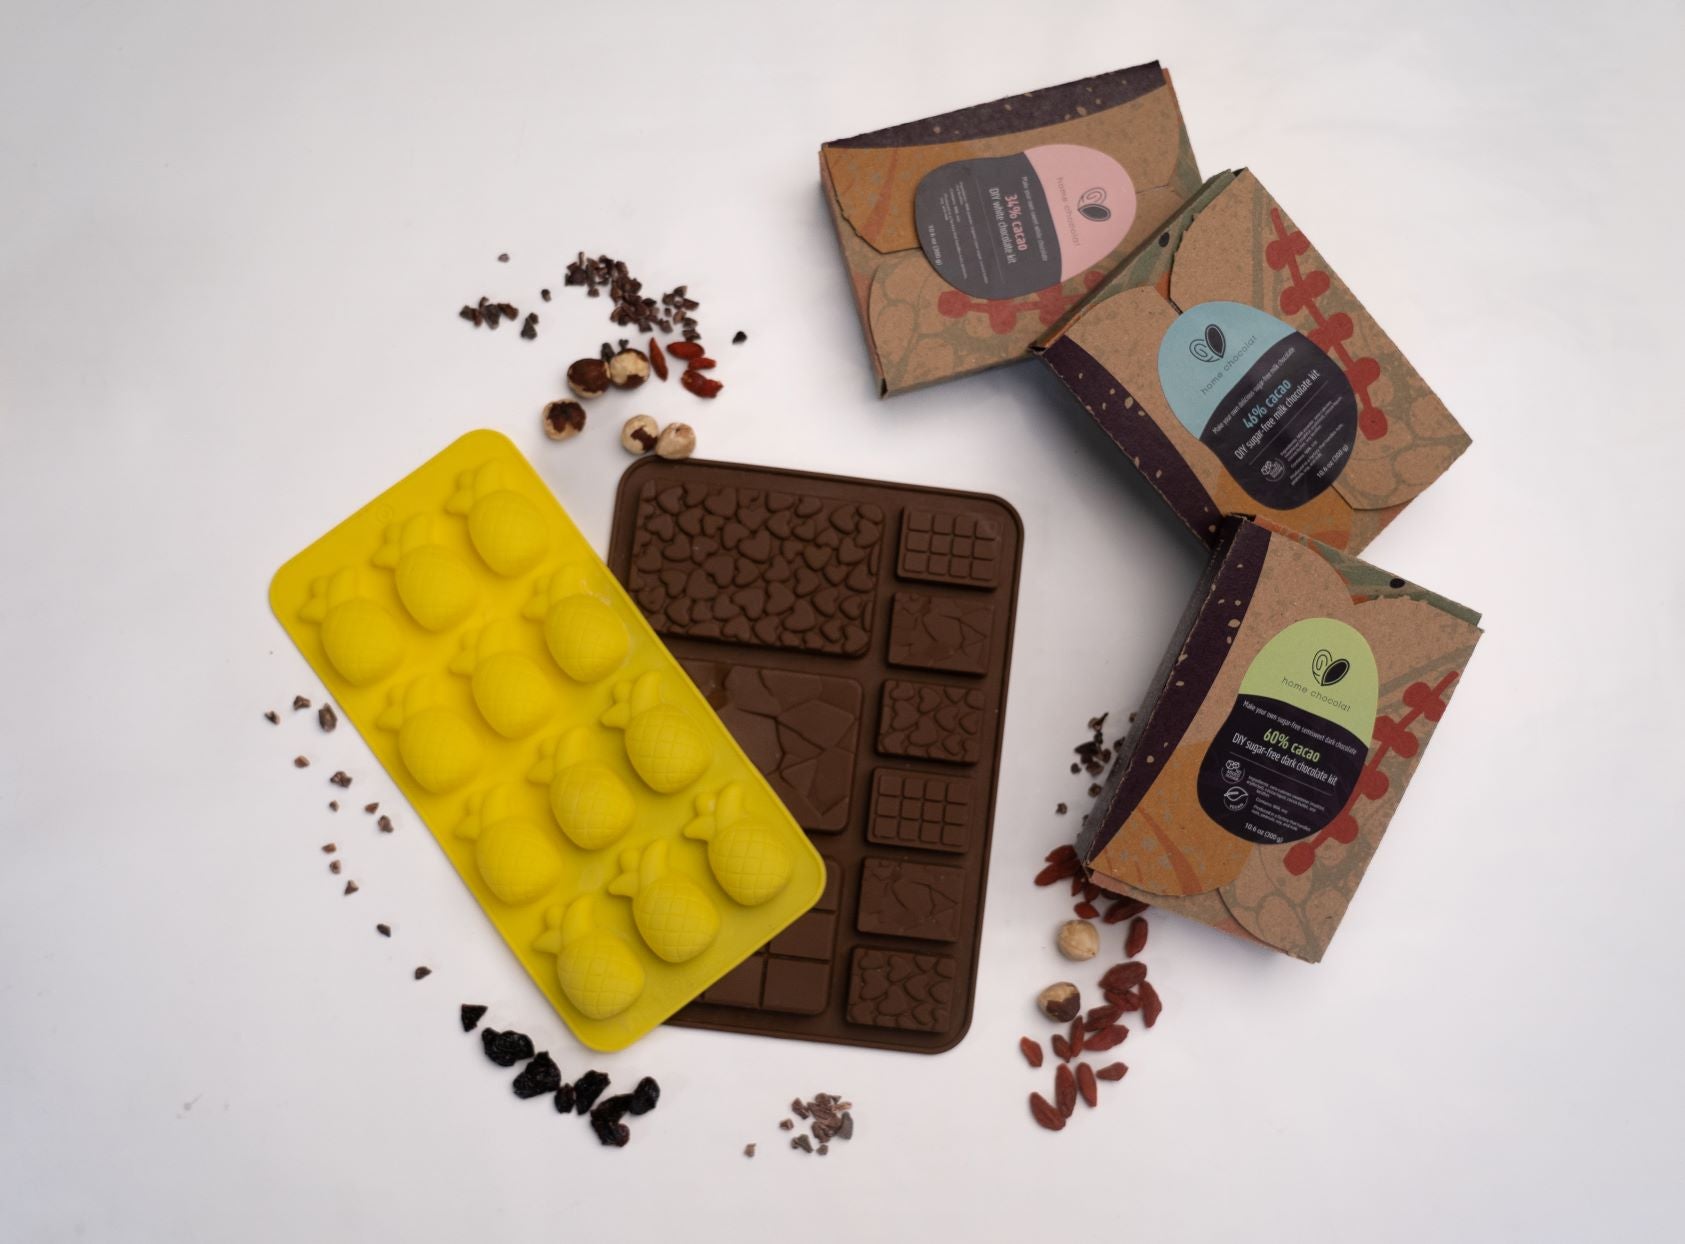 How to Make Chocolate in Molds - Chocolatiering DIY Chocolate Making